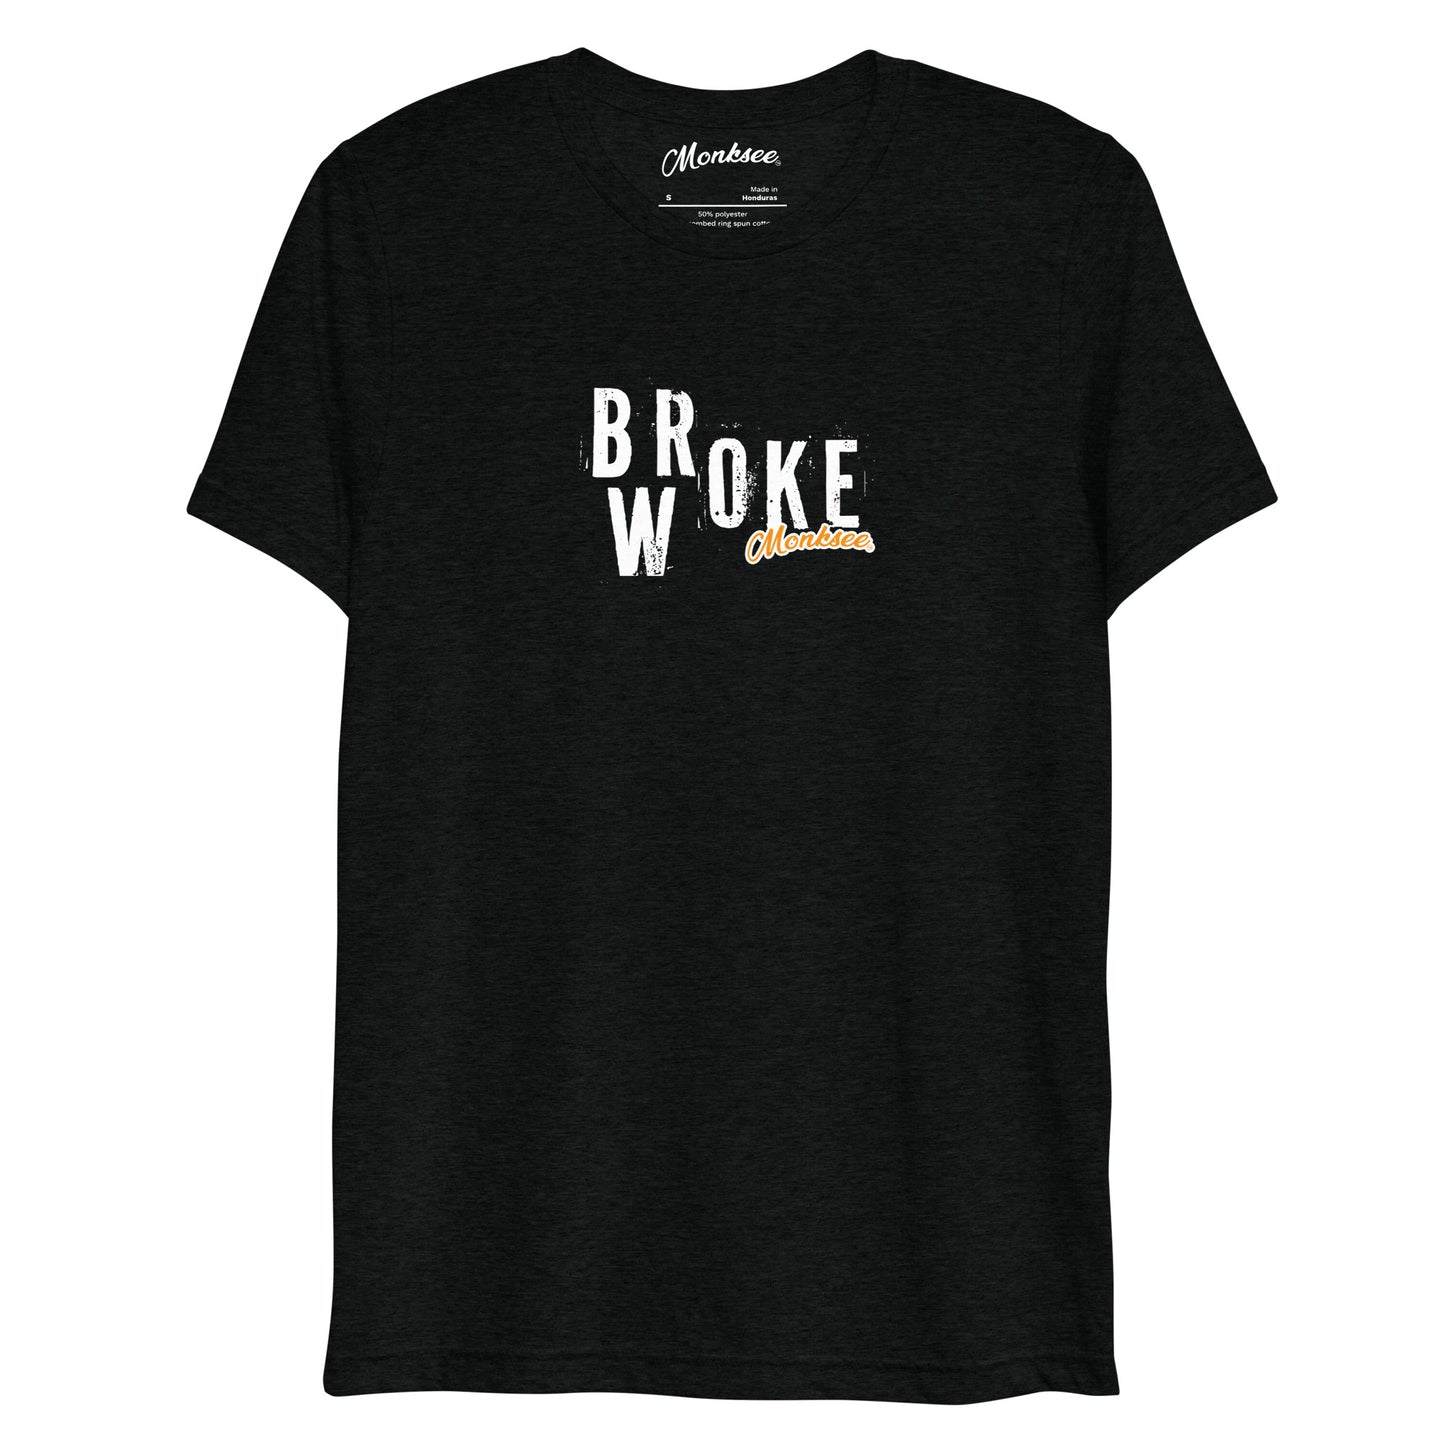 Broke t-shirt